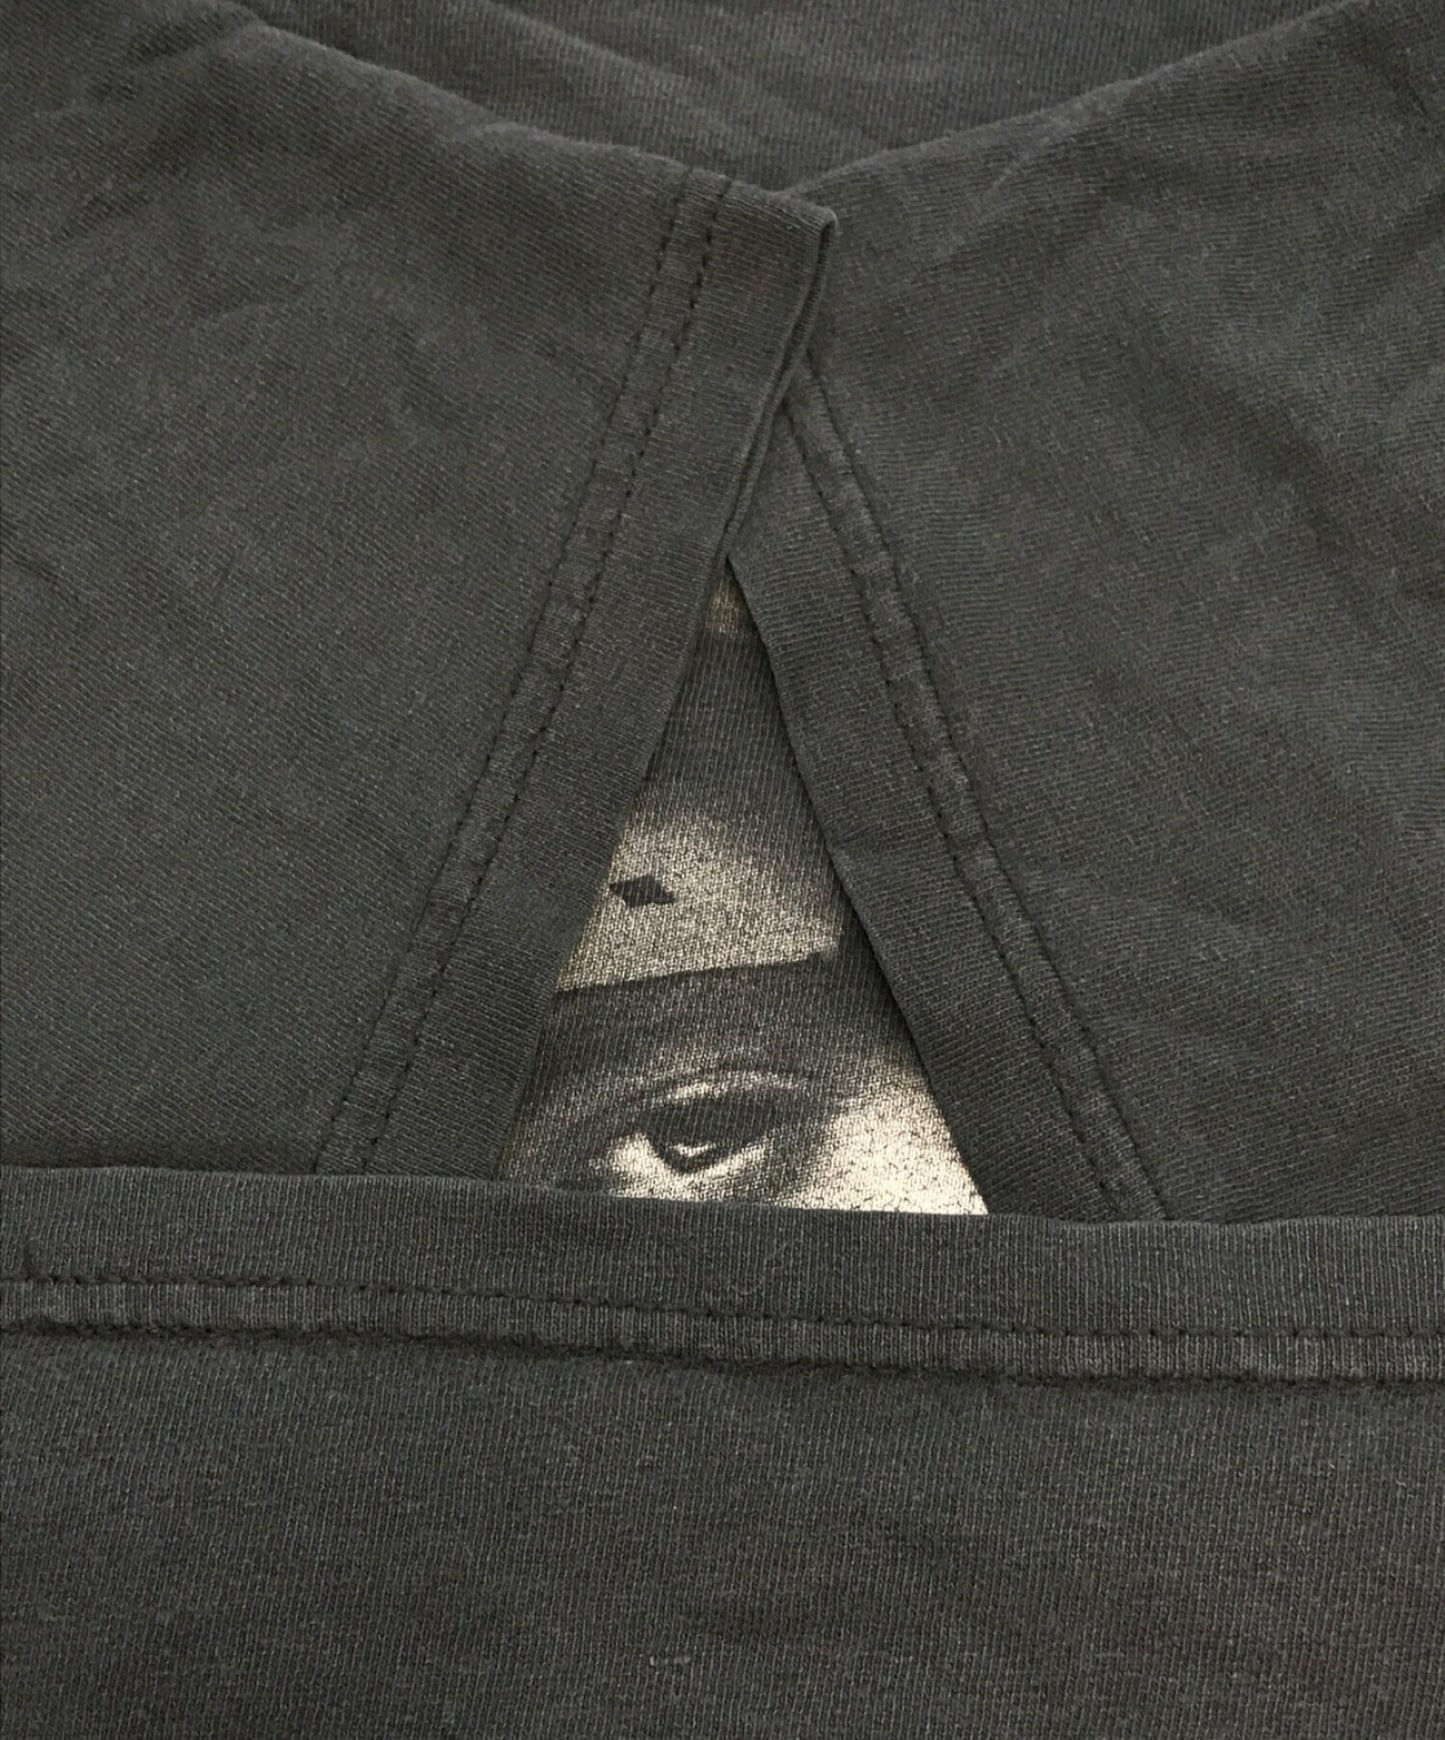 Eminem Artist T恤